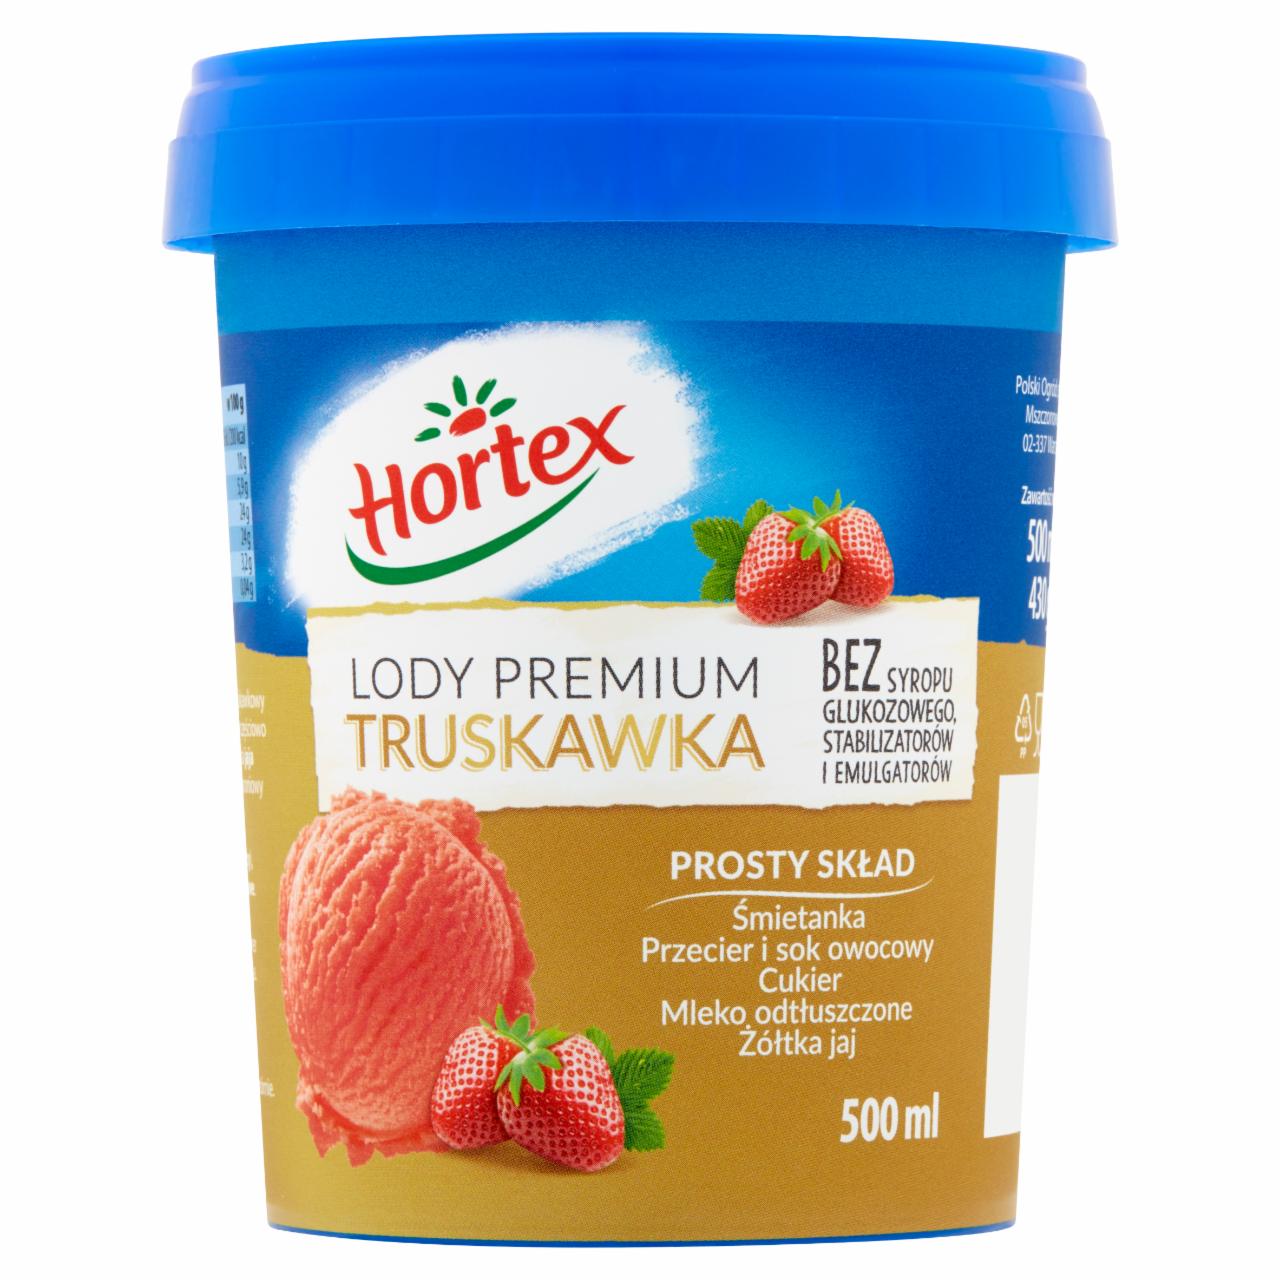 Zdjęcia - Hortex Lody premium truskawka 500 ml